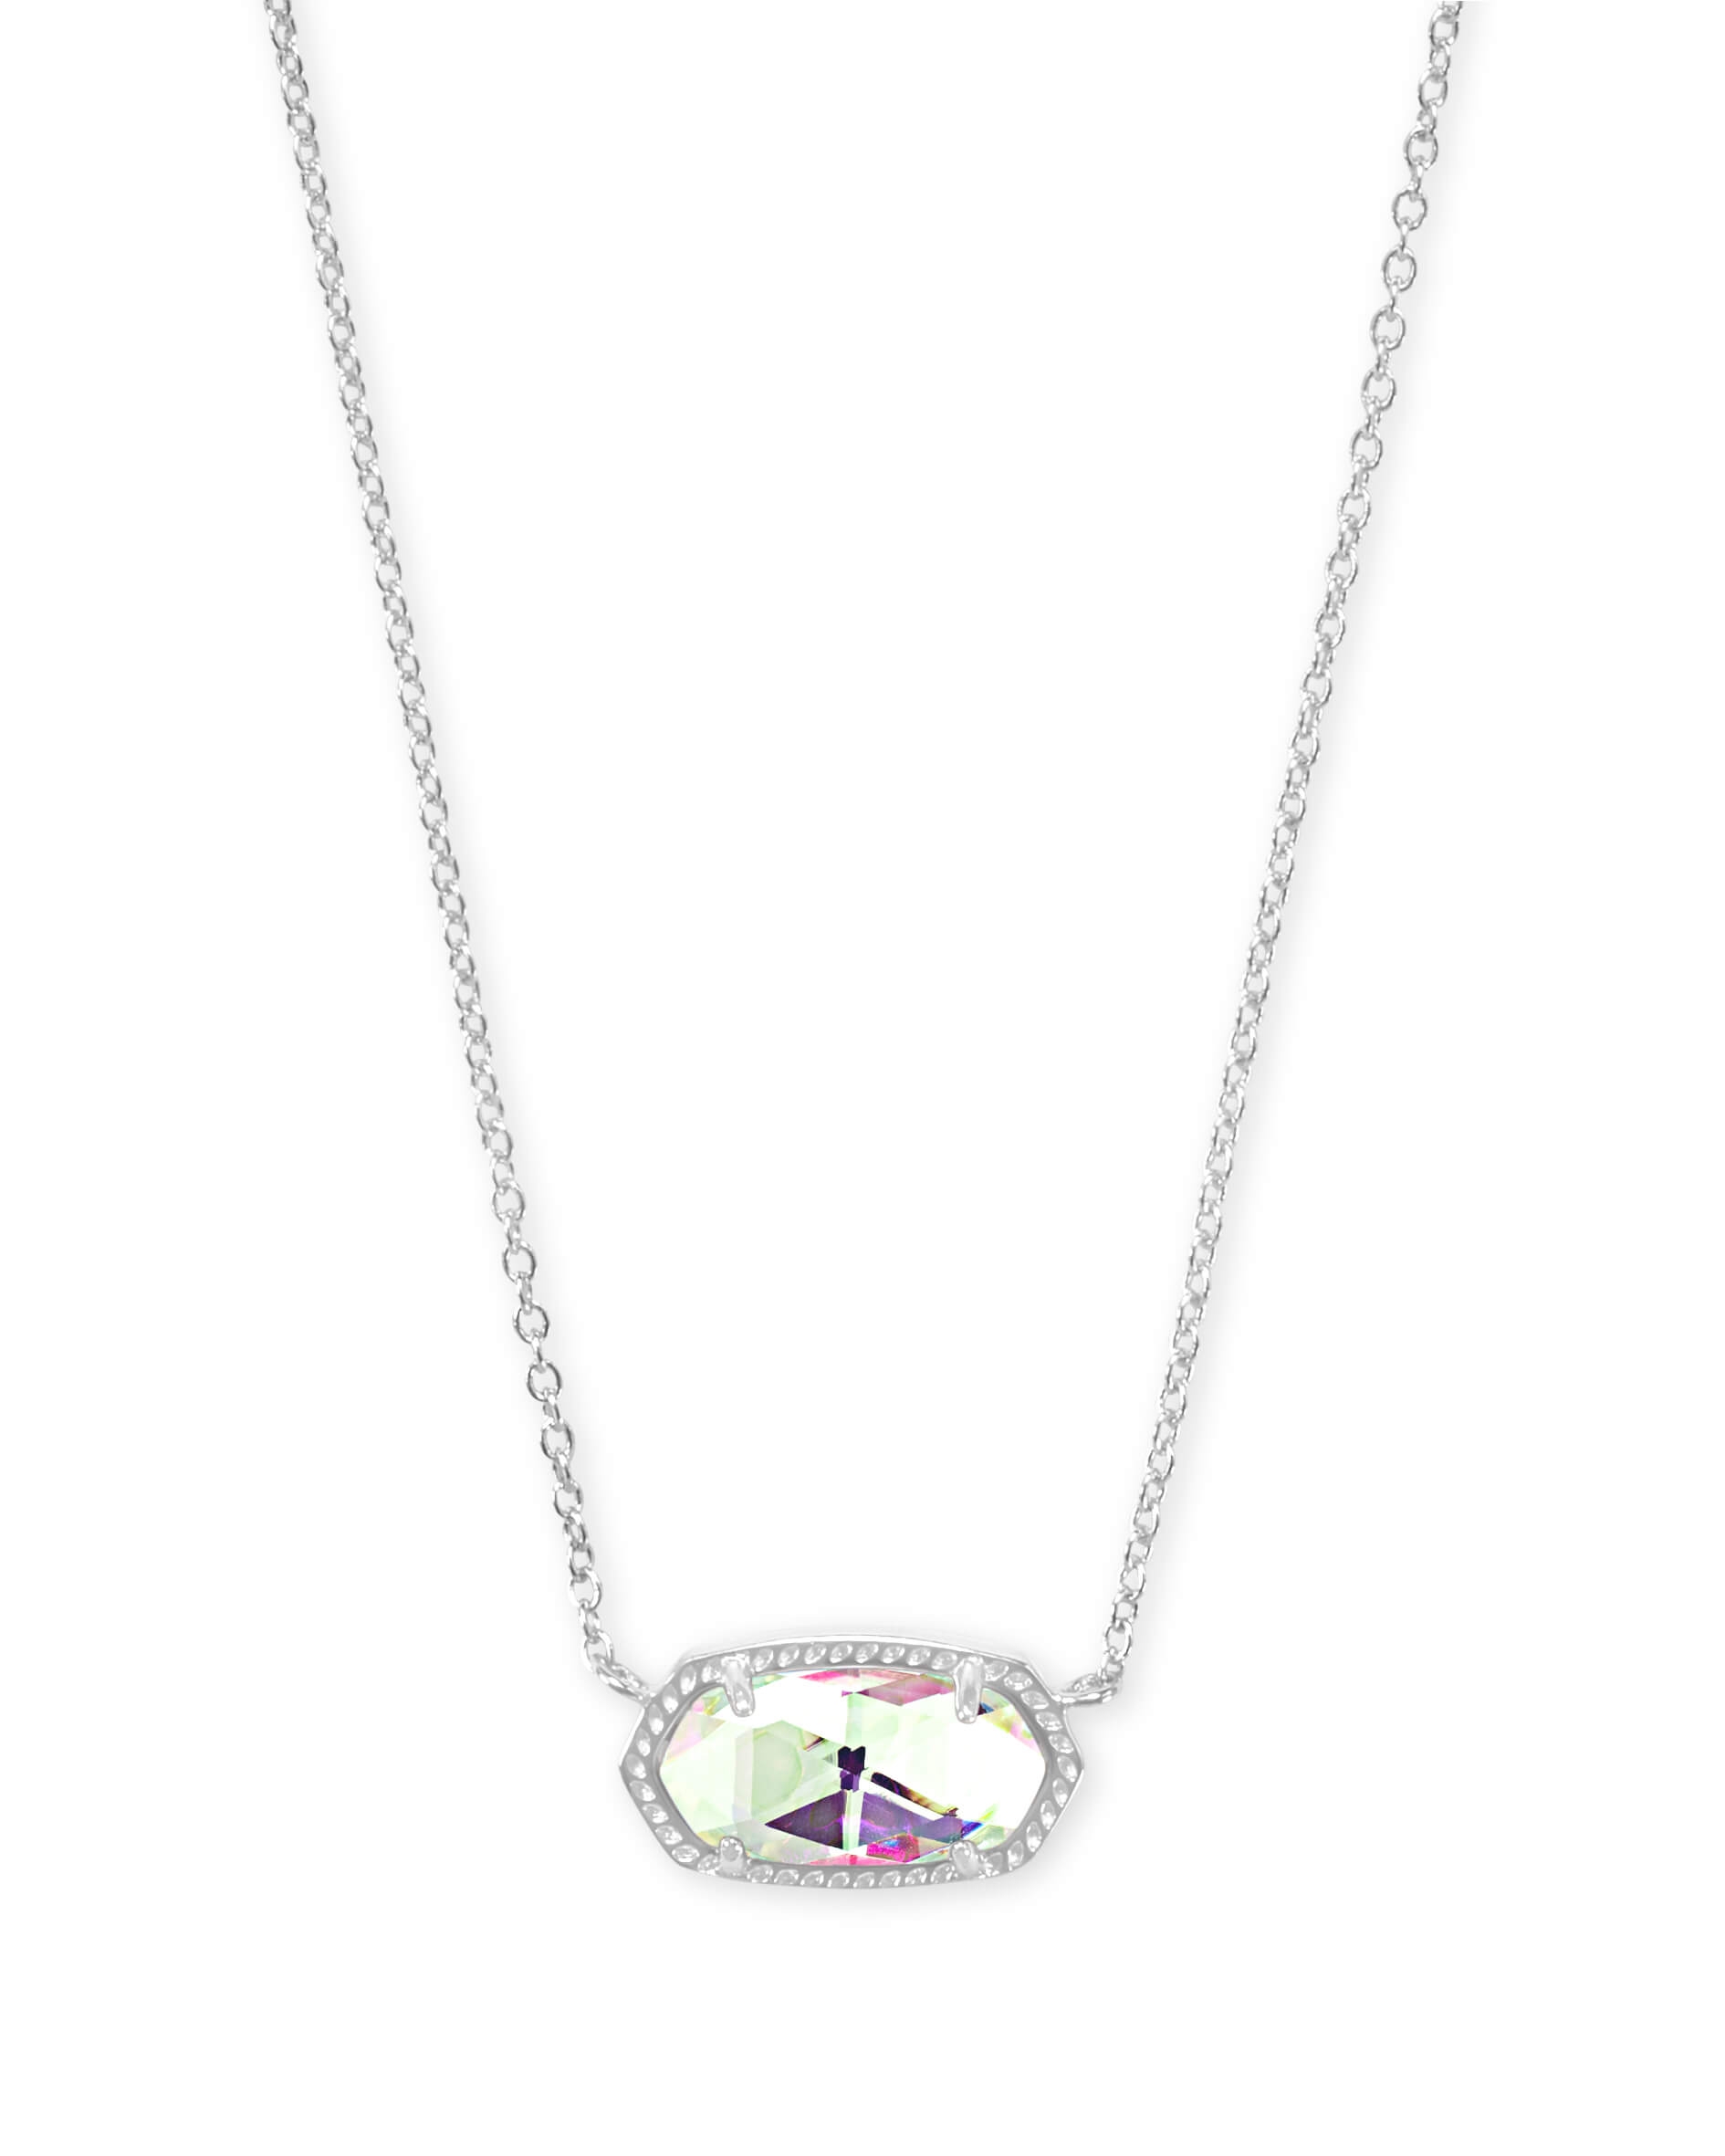 Kendra Scott Ever Silver Pendant Necklace in Iridescent Drusy | 4217717450  | Borsheims